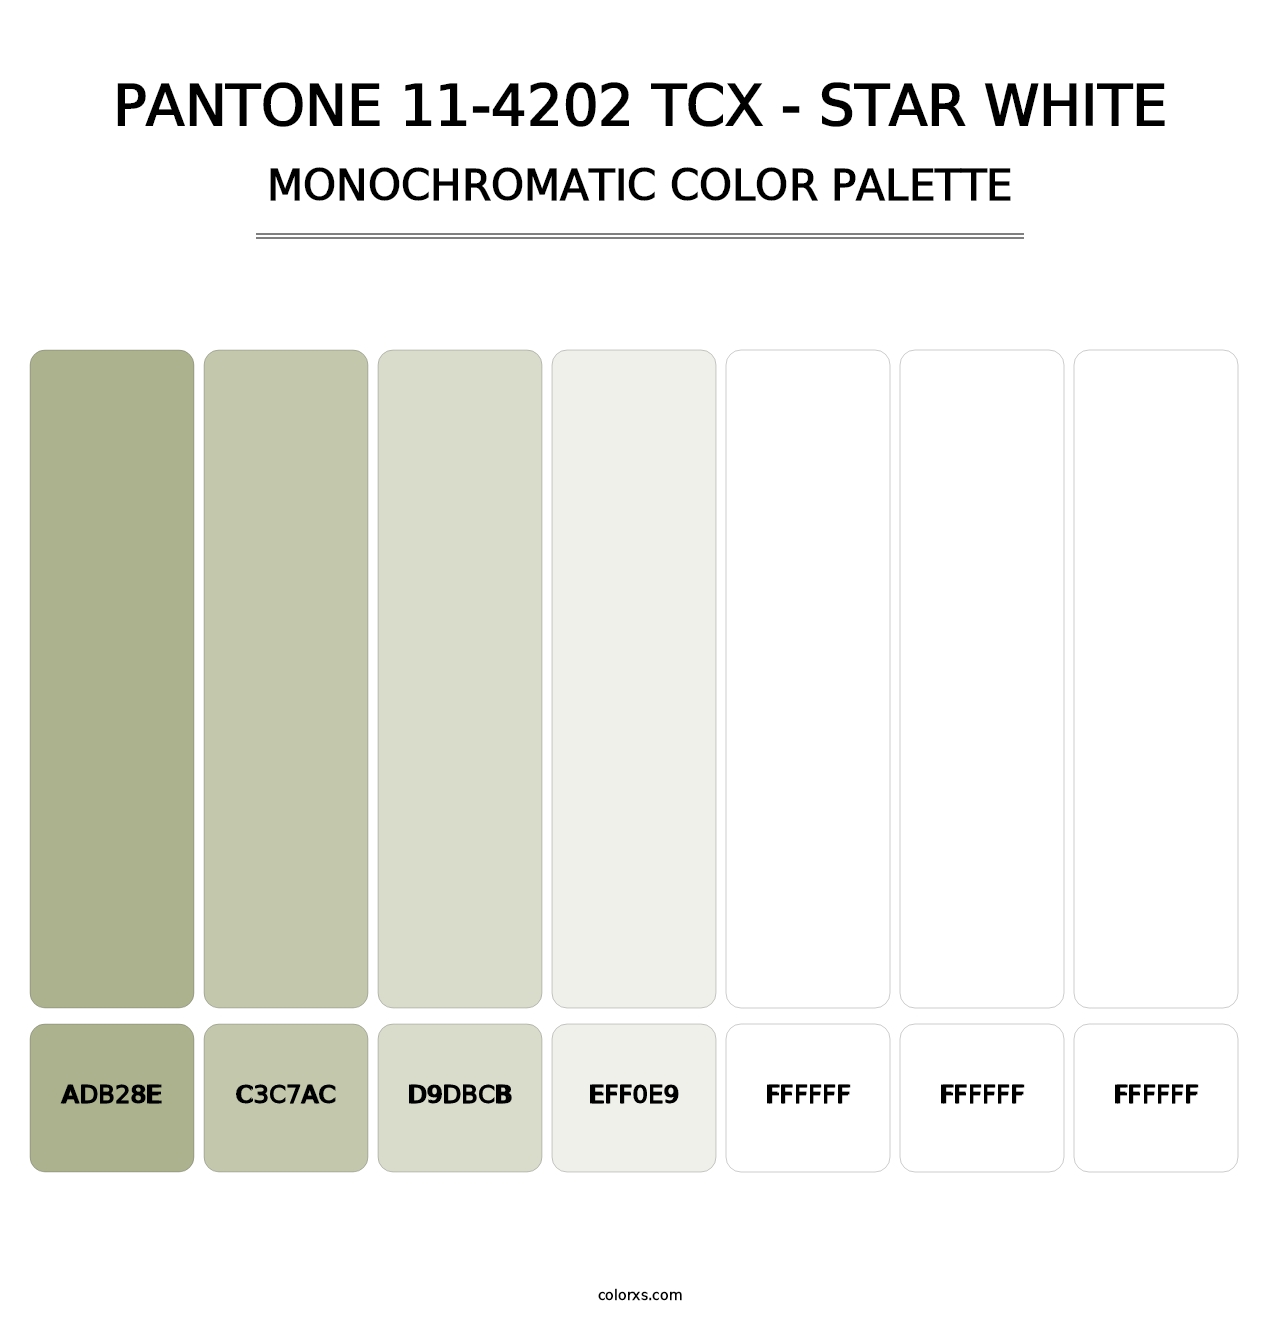 PANTONE 11-4202 TCX - Star White - Monochromatic Color Palette